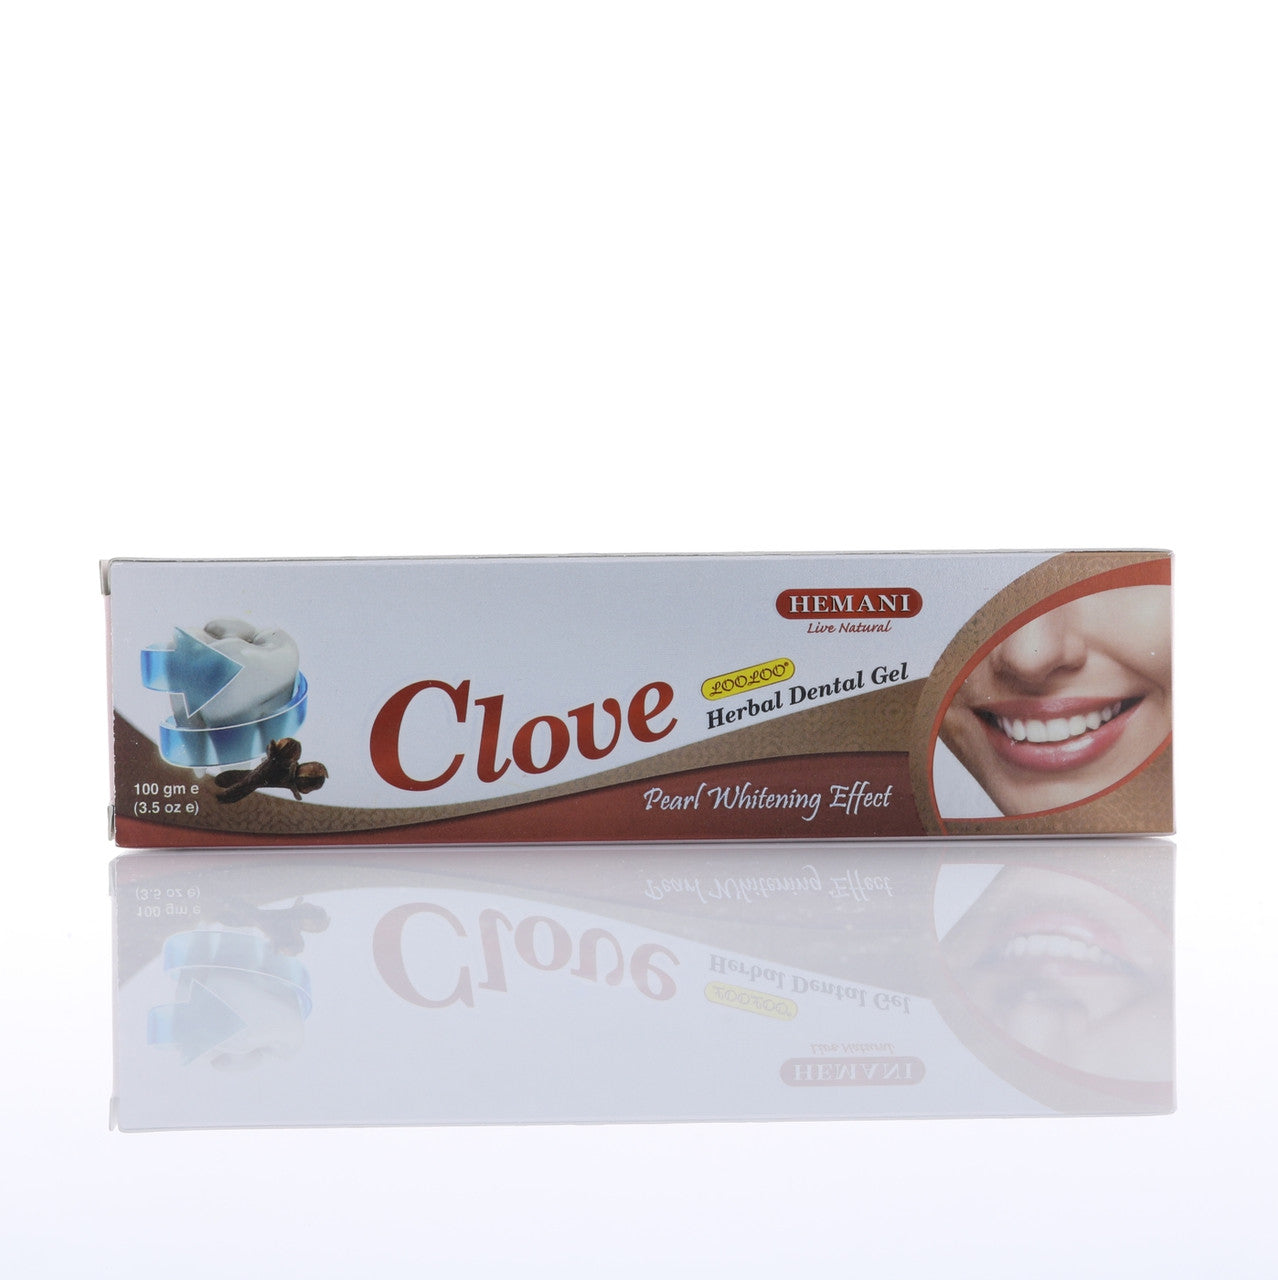 HEMANI Clove Toothpaste 100g